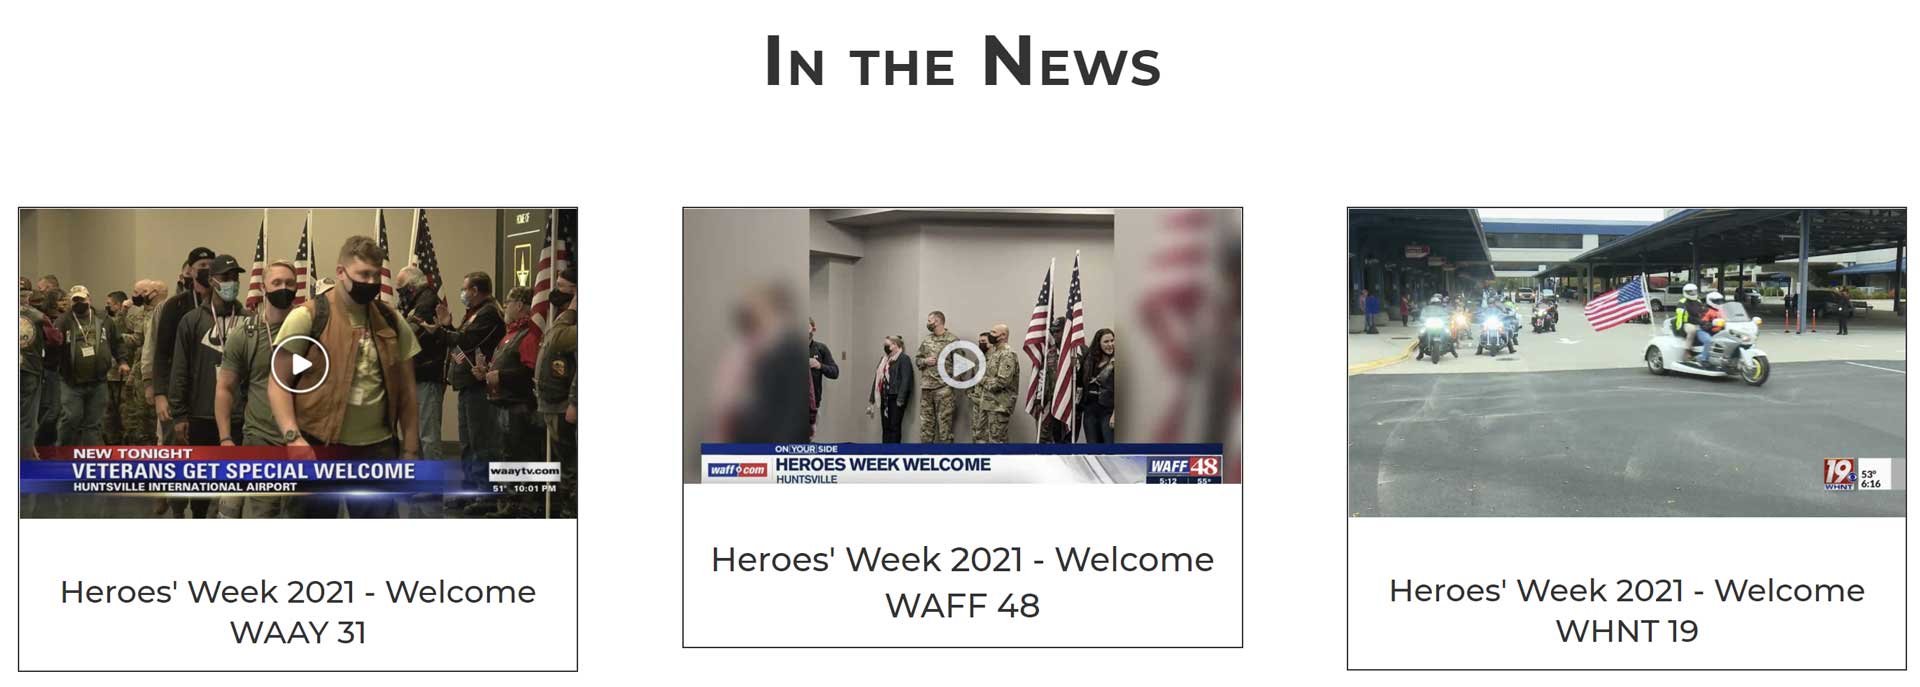 Screenshot-2021-heroes-week-welcome-news